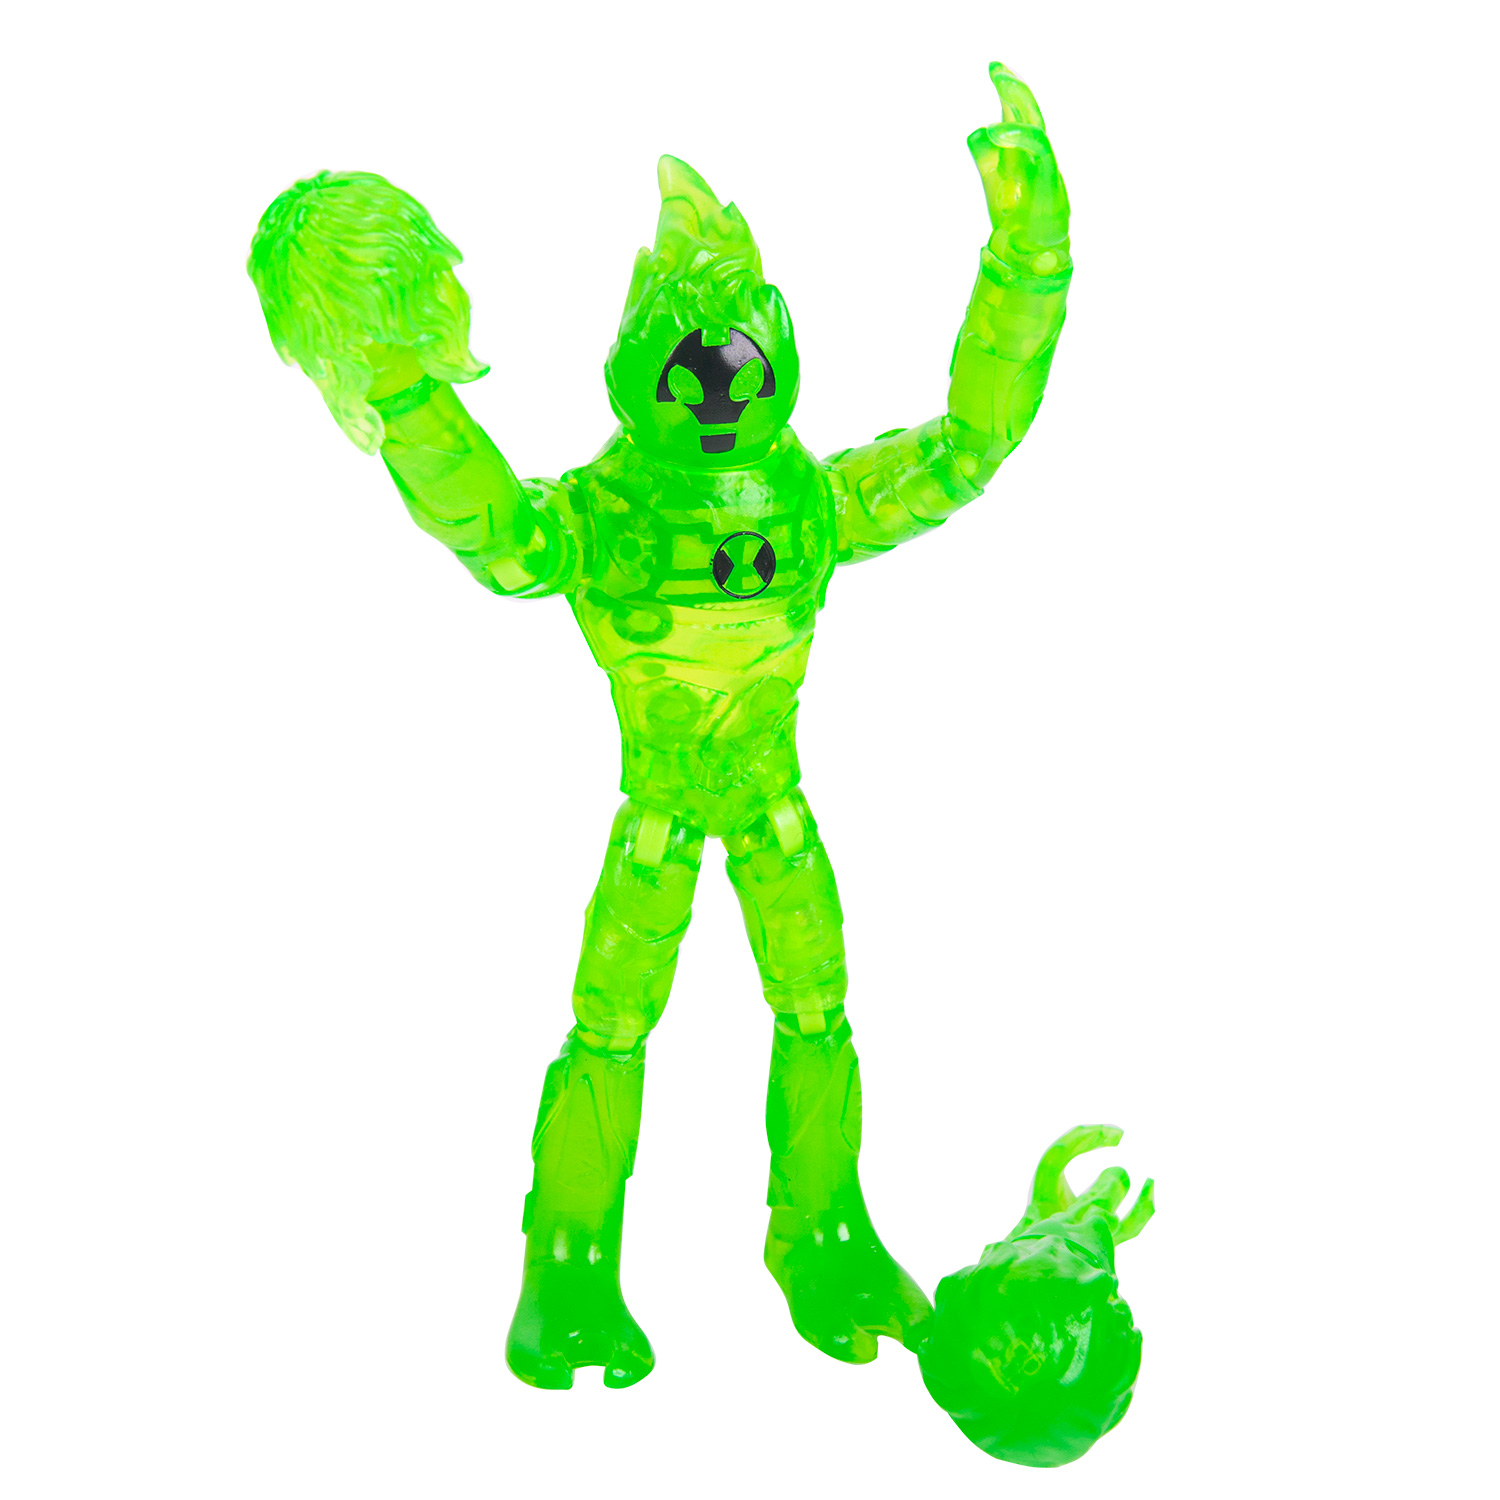 Фигурка Ben-10 Человек-огонь из Омнитрикс, 12.5 см фигурка игрушка поп топ человек огонь бен 10